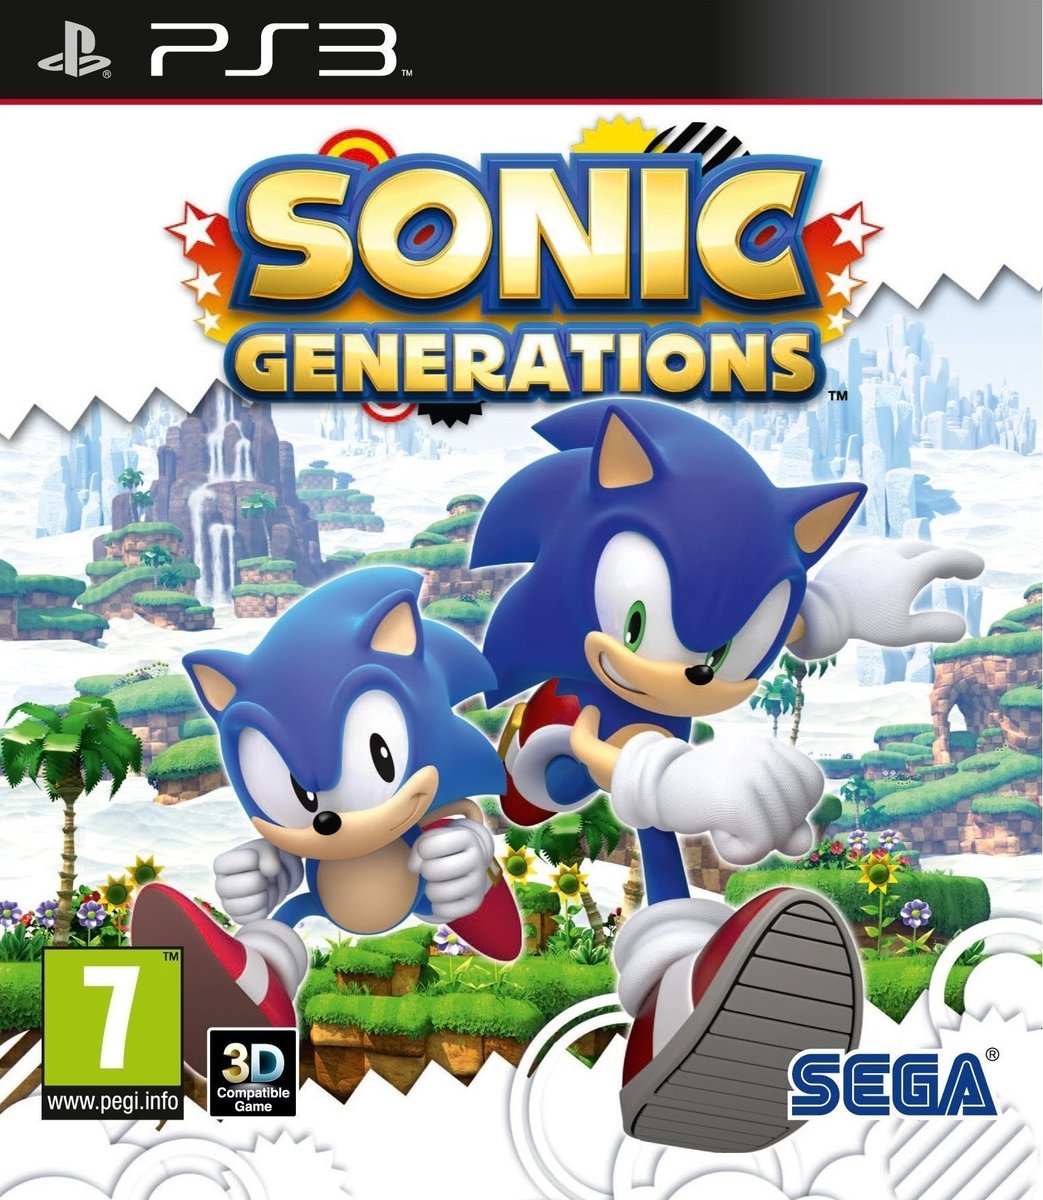 SONIC GENERATIONS PS3 - SEGA 1.14.01.14.002